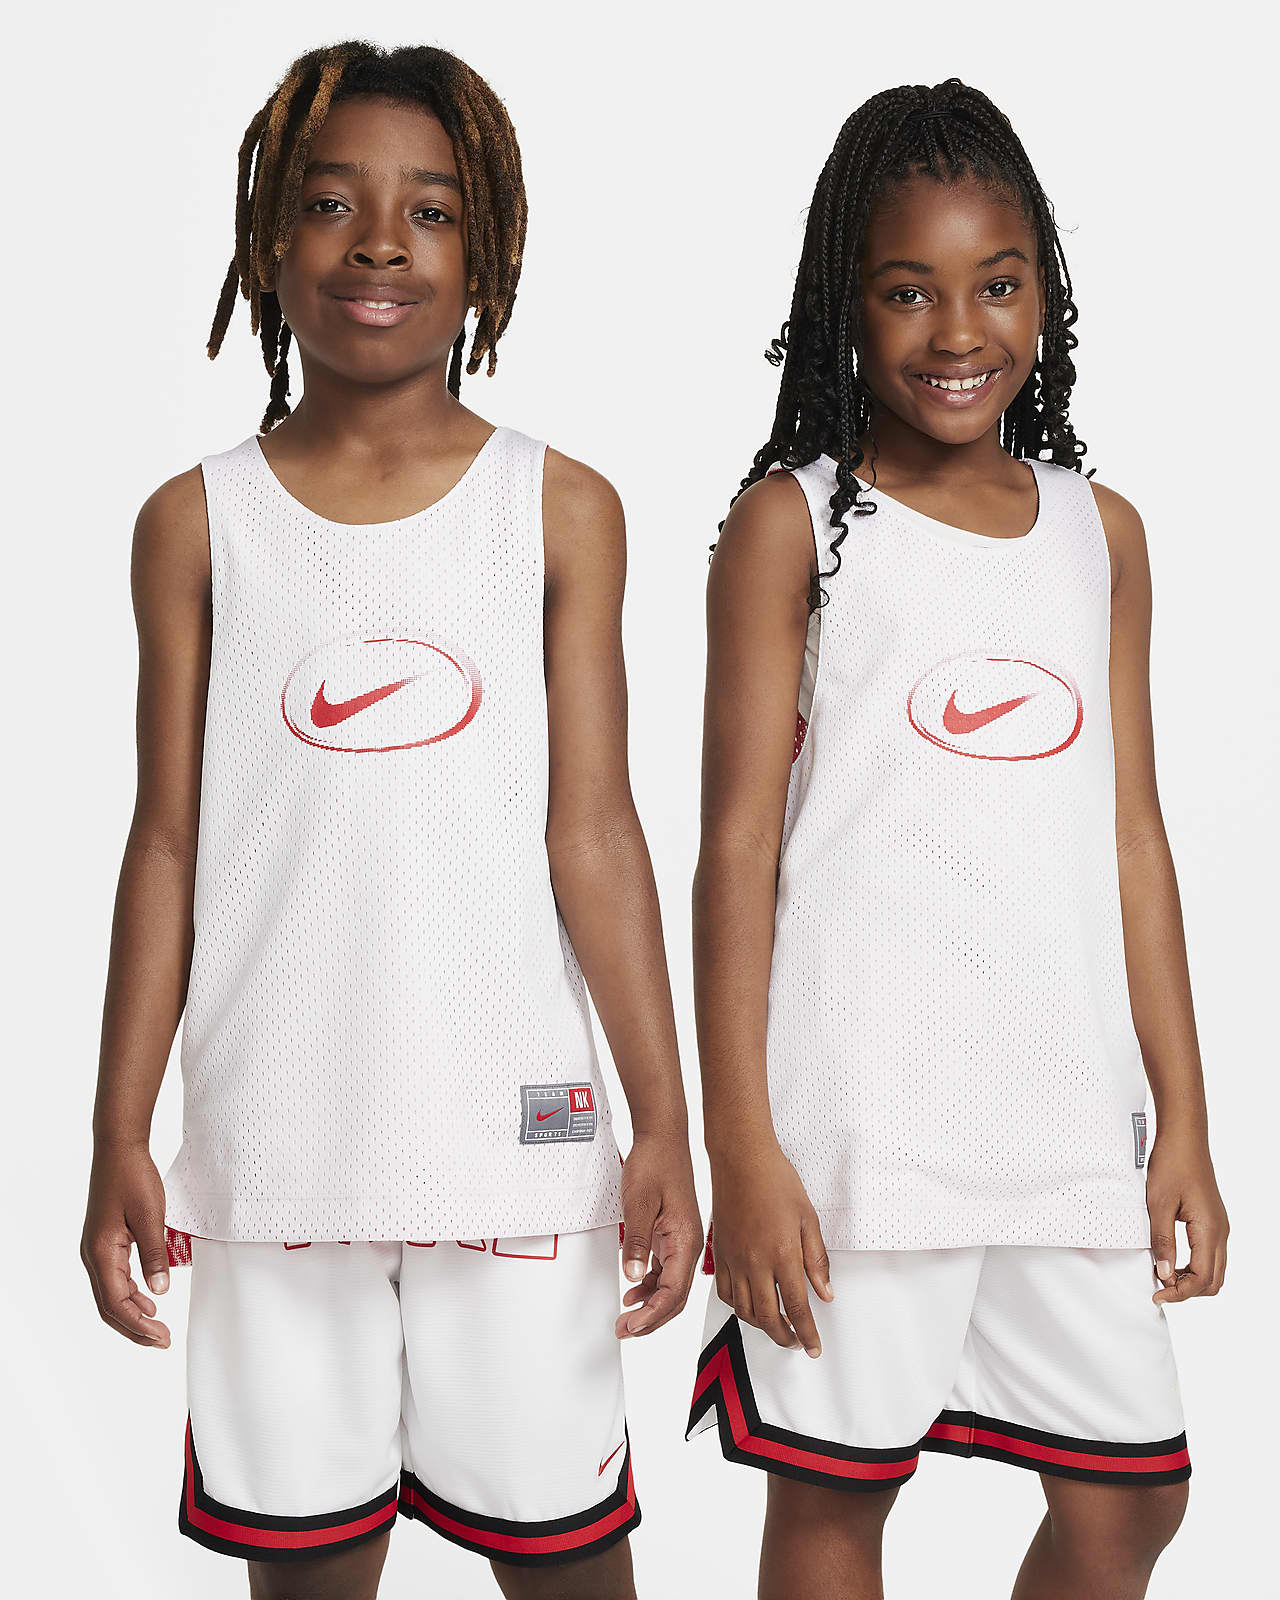 Nike Culture of Basketball omkeerbare jersey voor kids